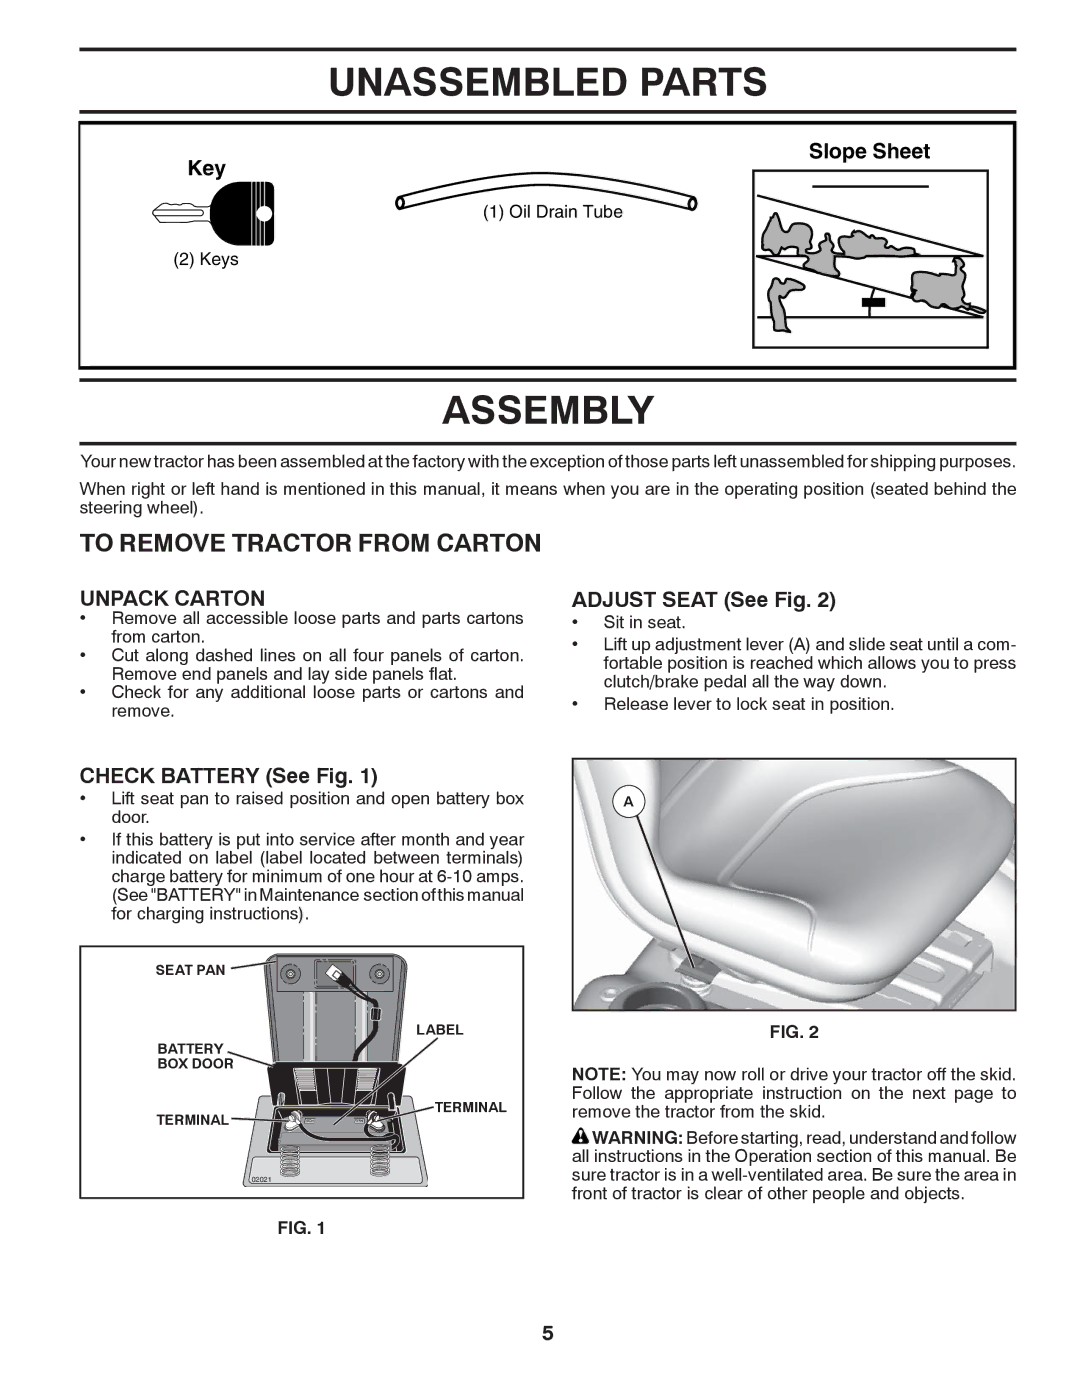 Husqvarna 2042 LS (CA) manual Unassembled Parts, Assembly, To Remove Tractor from Carton, Unpack Carton 